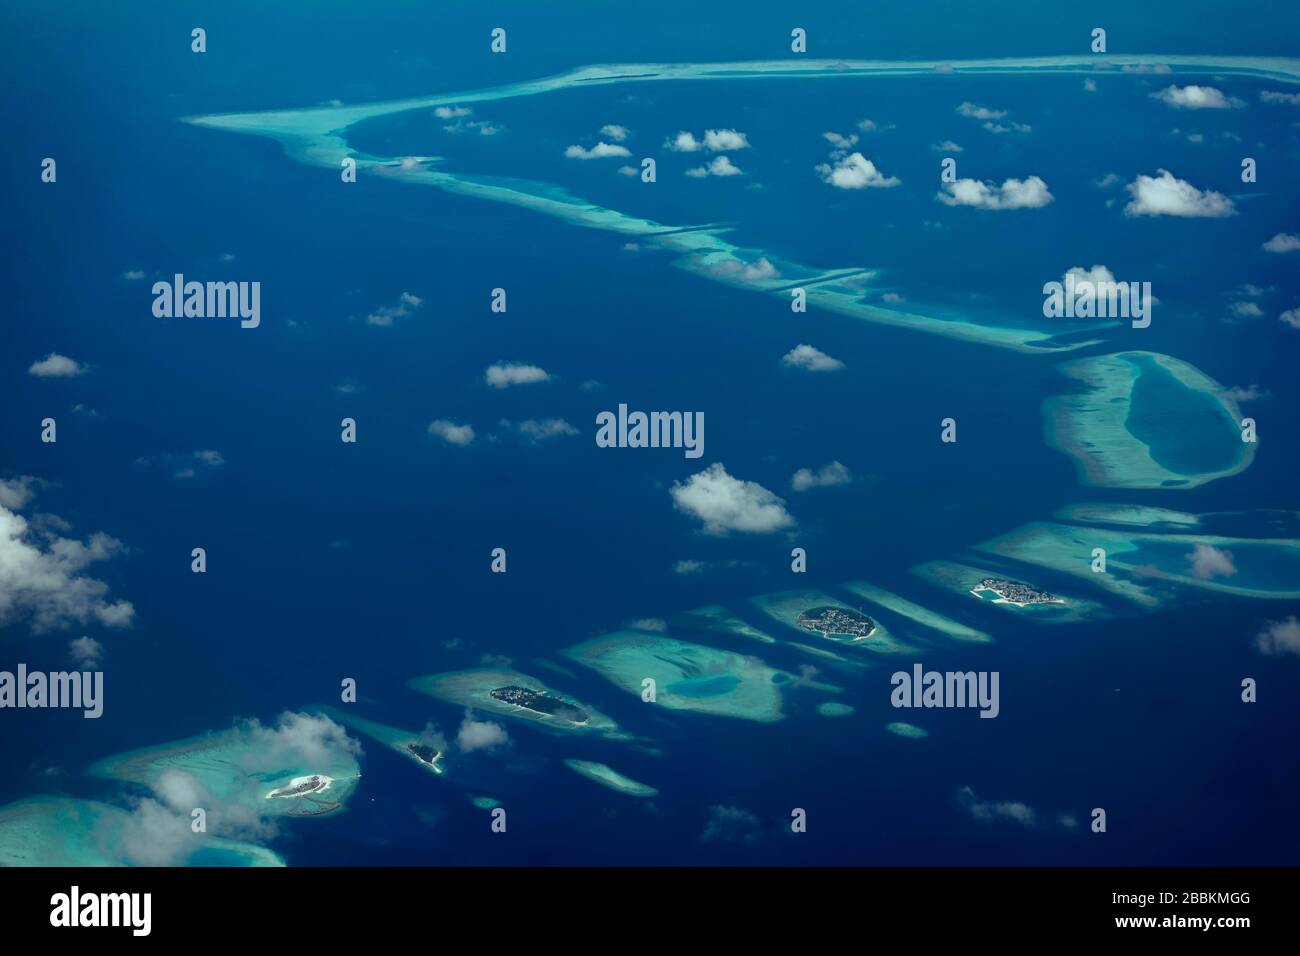 Chain of inhabited islands, from right Keyodhoo, Felidhoo, Thinadhoo, Arah Beach Resort, Vaavu Atoll or Felidhu Atoll, Indian Ocean, Maldives Stock Photo